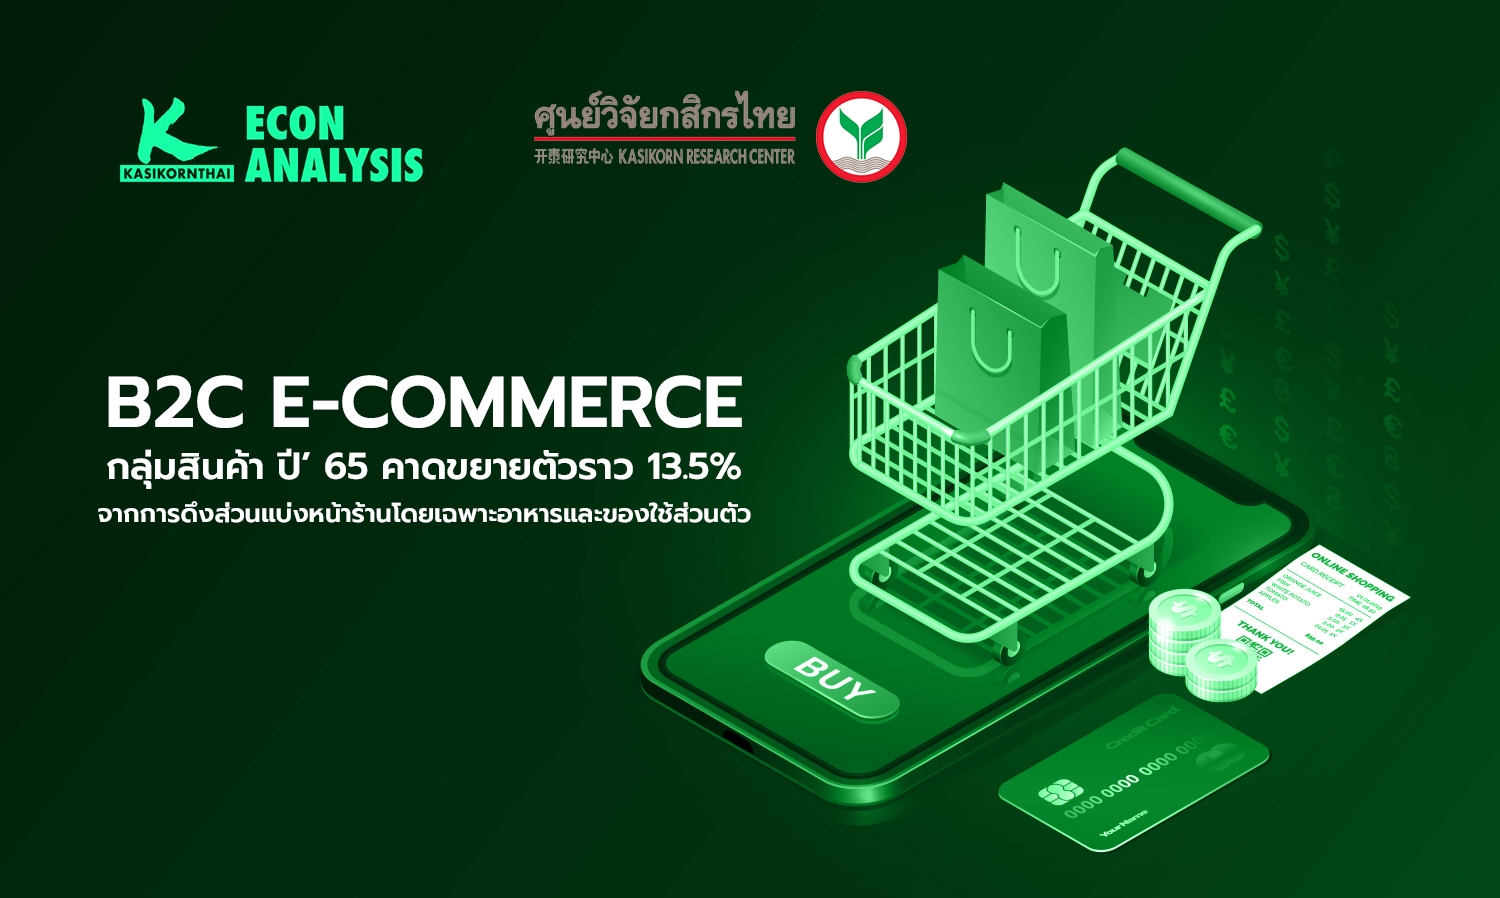 B2C E-commerce กลุ่มสินค้า ปี’ 65 คาดขยายตัวราว 13.5% จากการดึงส่วนแบ่งหน้าร้านโดยเฉพาะอาหารและของใช้ส่วนตัว